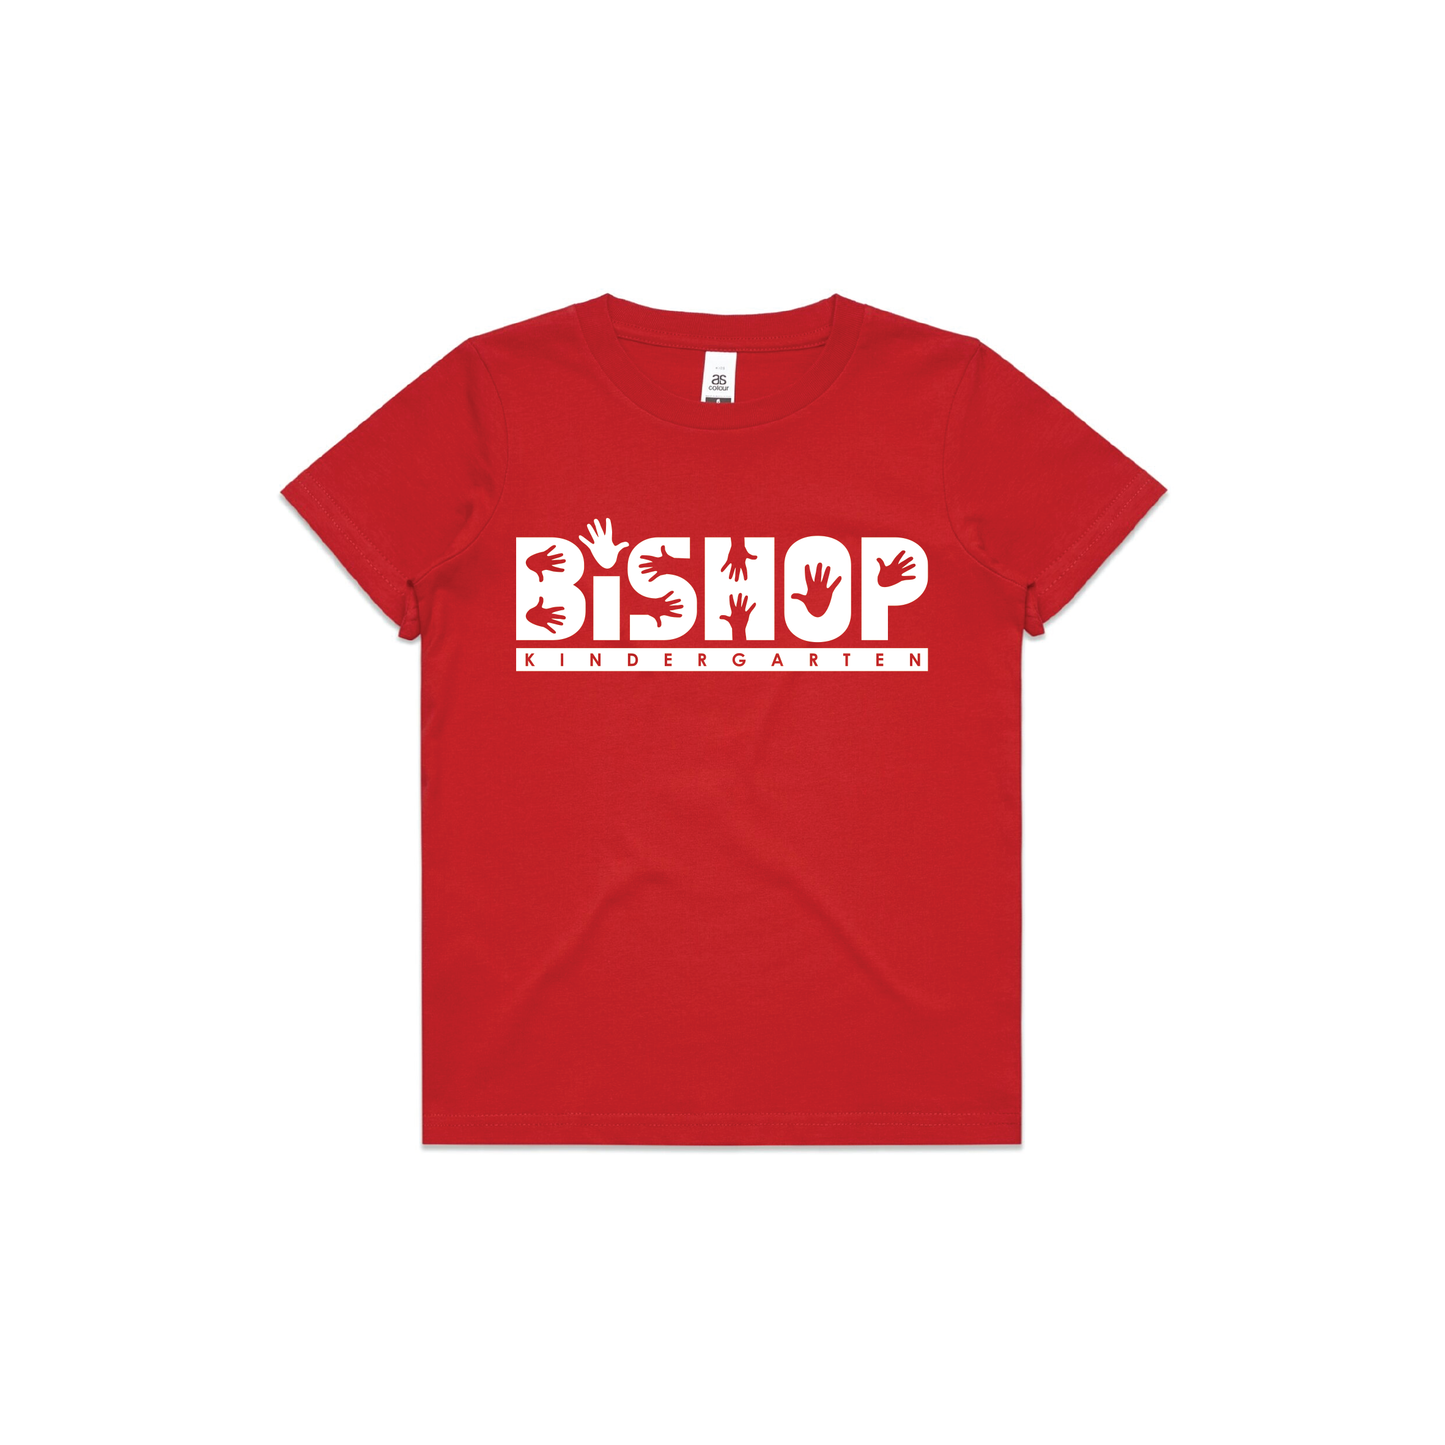 Bishop Kindy Tee